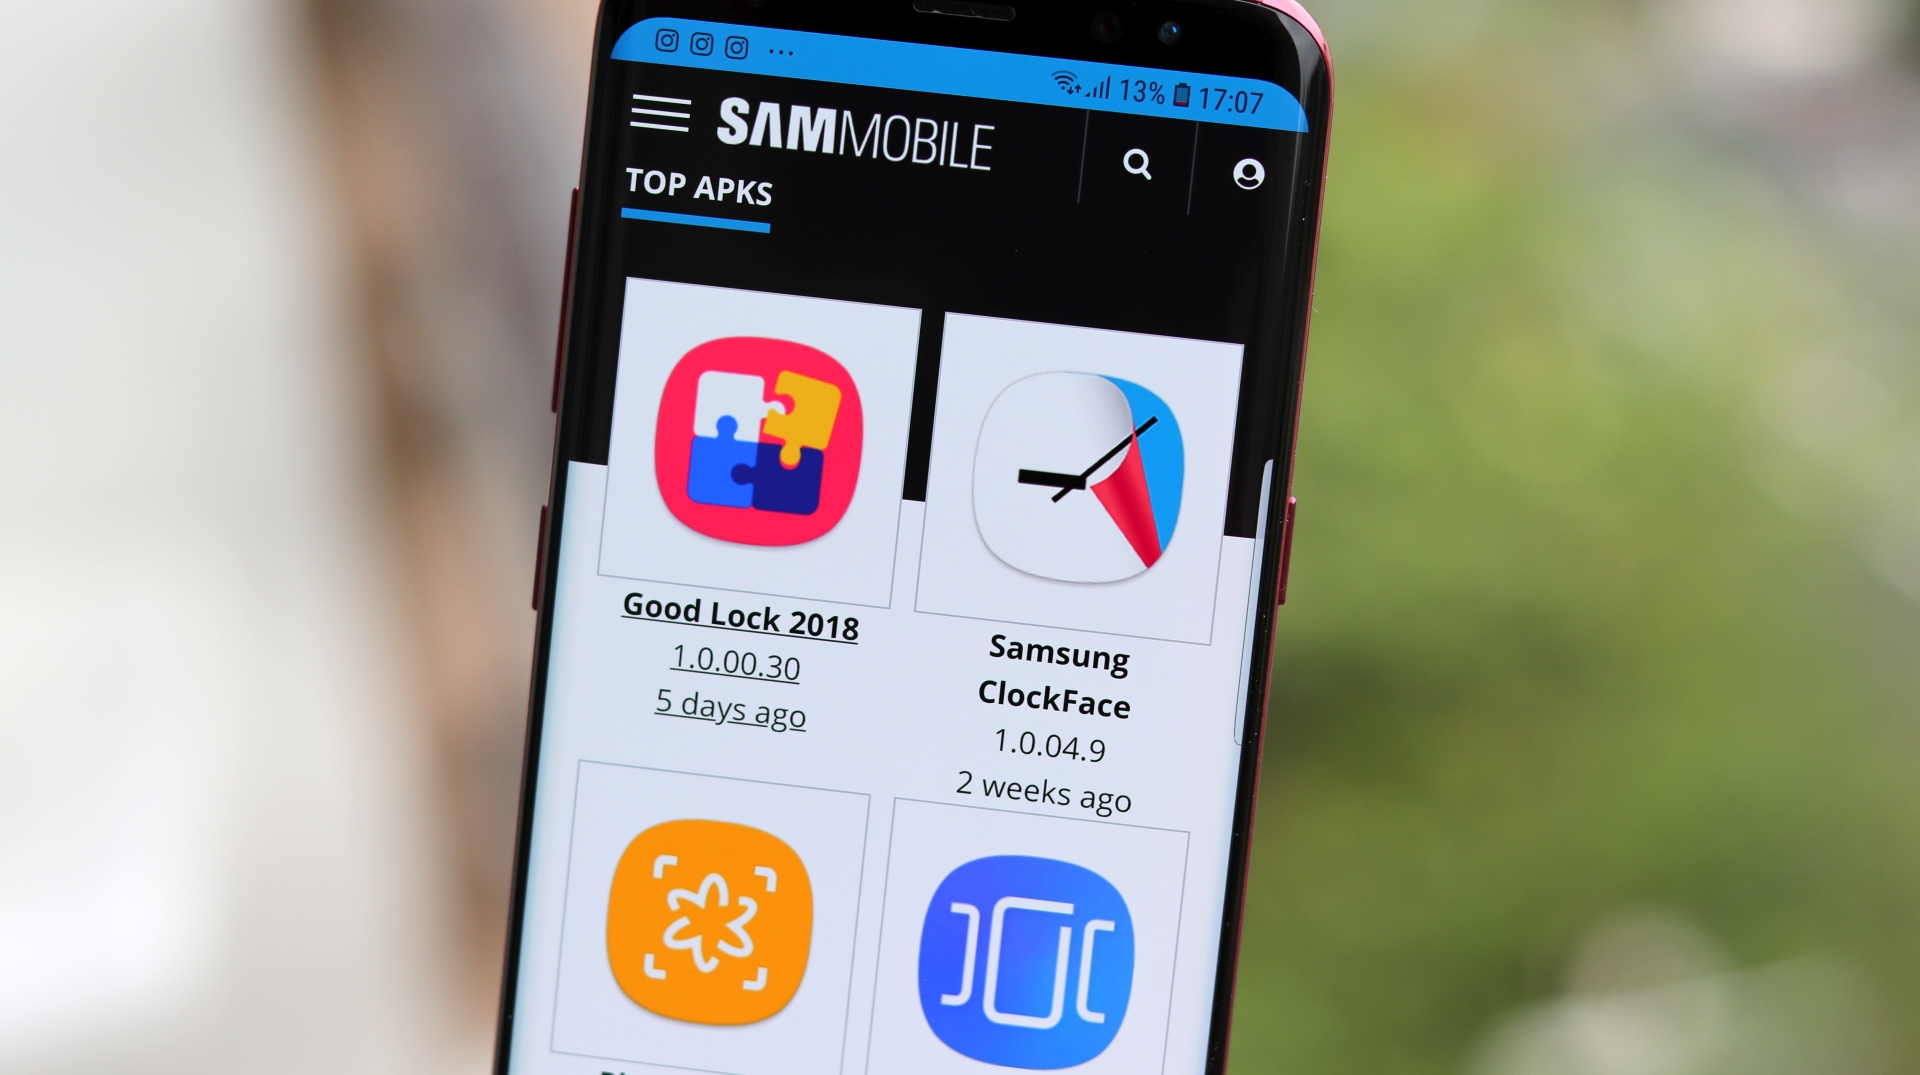 Top APKs on SamMobile this week - SamMobile